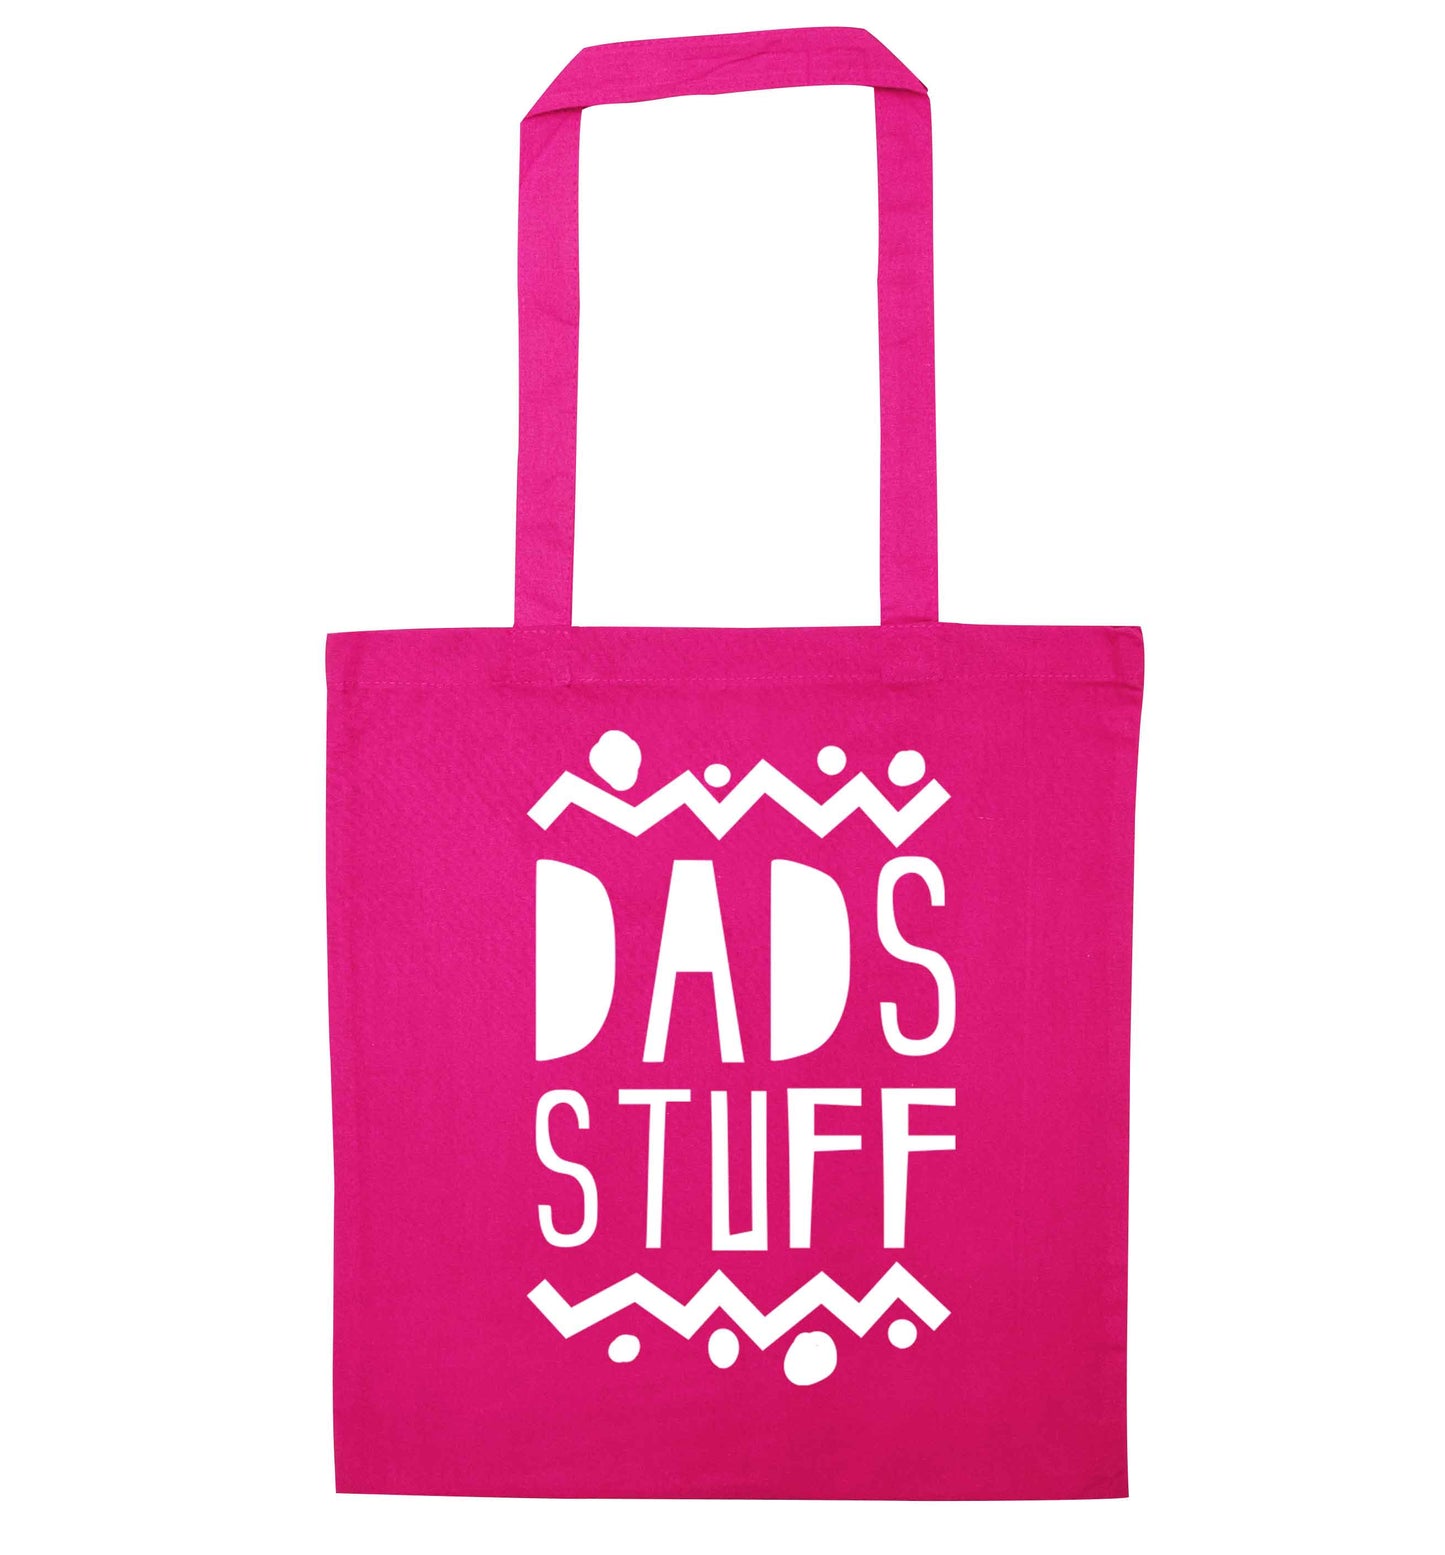 Dads stuff pink tote bag